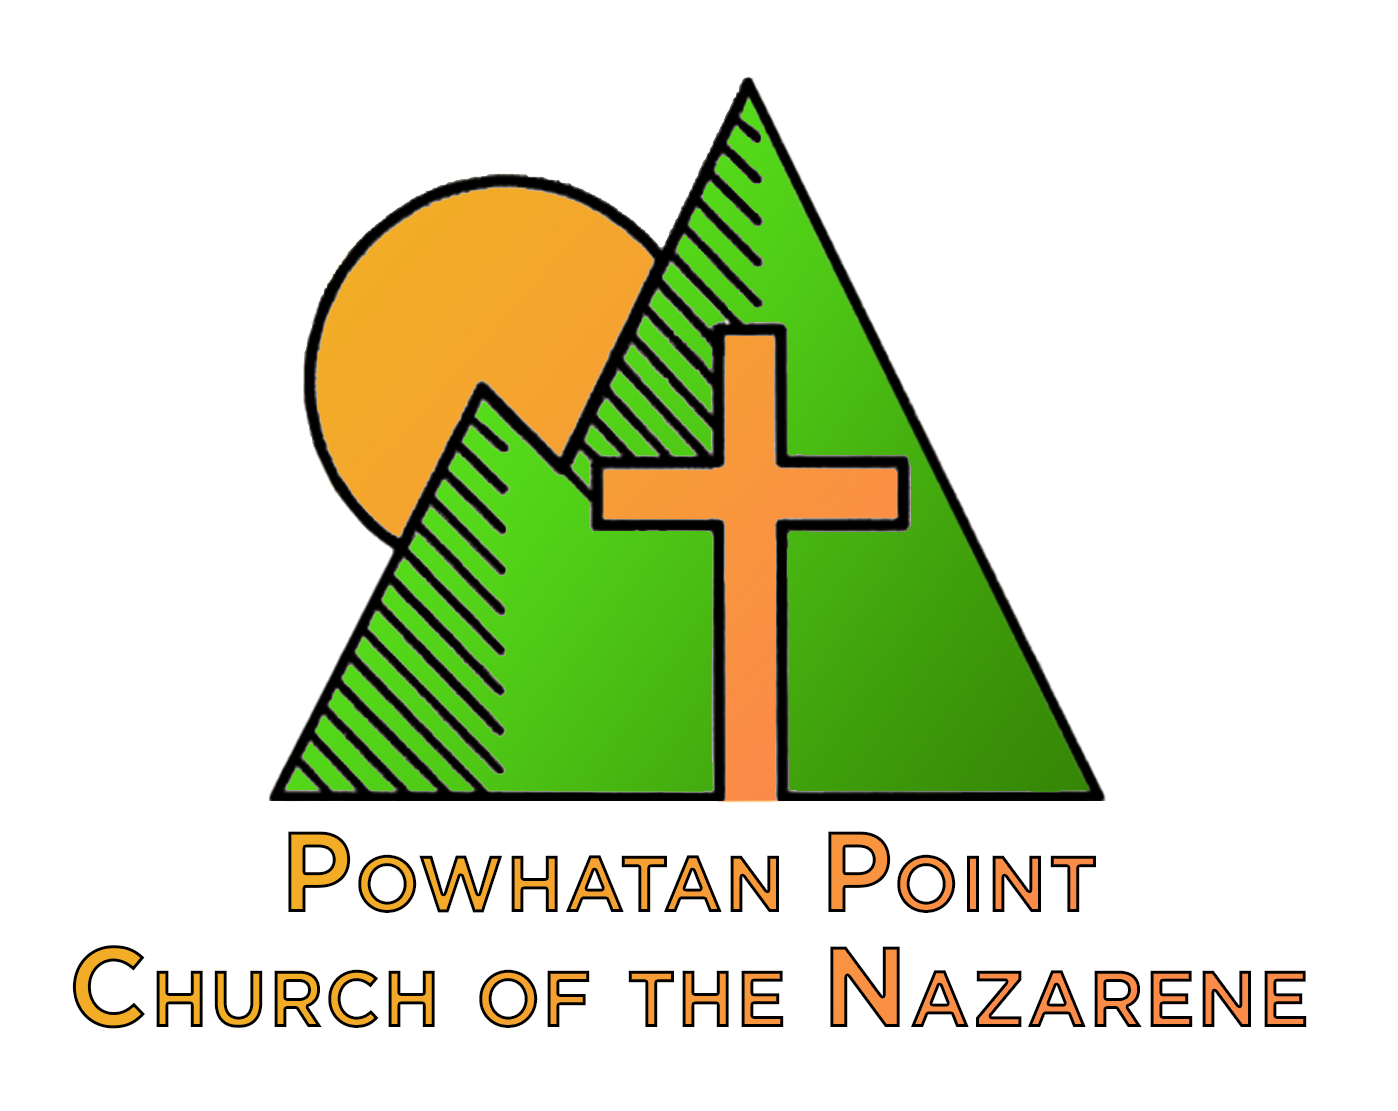 Powhatan Point Church of the Nazarene